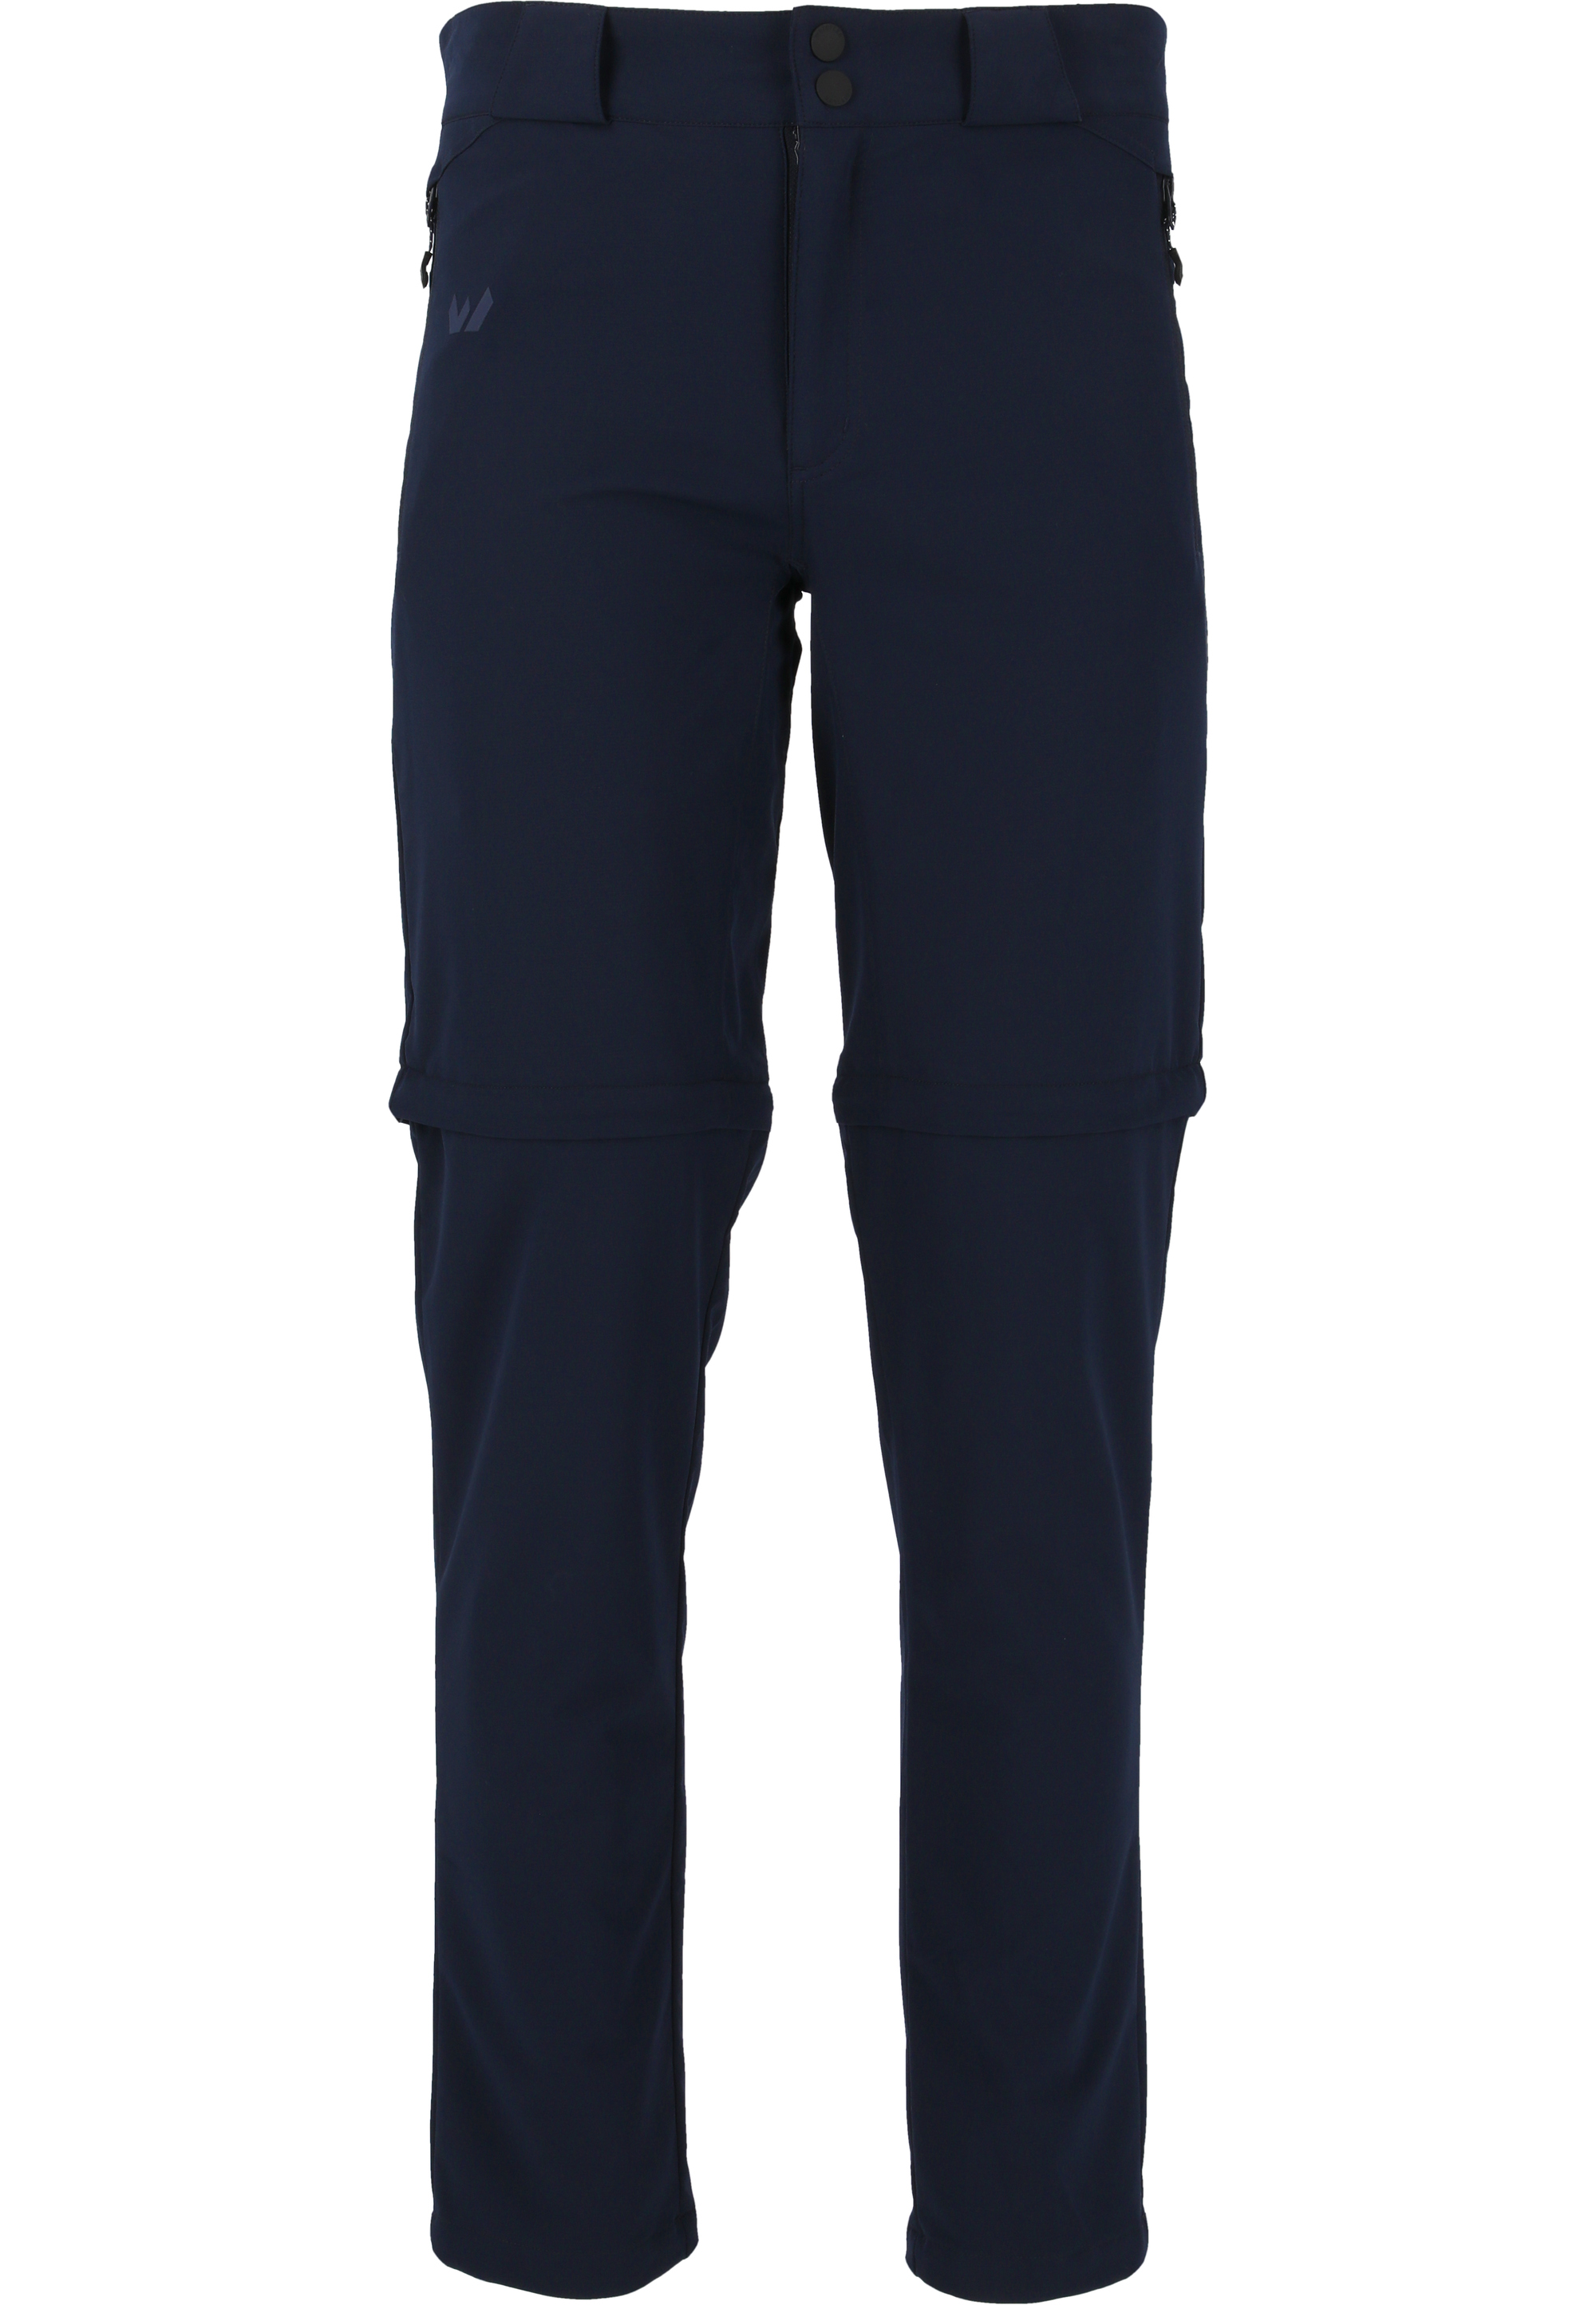 Тканевые брюки Whistler Outdoor Gerdi, цвет 2048 Navy Blazer куртка cruz sweatjacke pitt цвет 2048 navy blazer